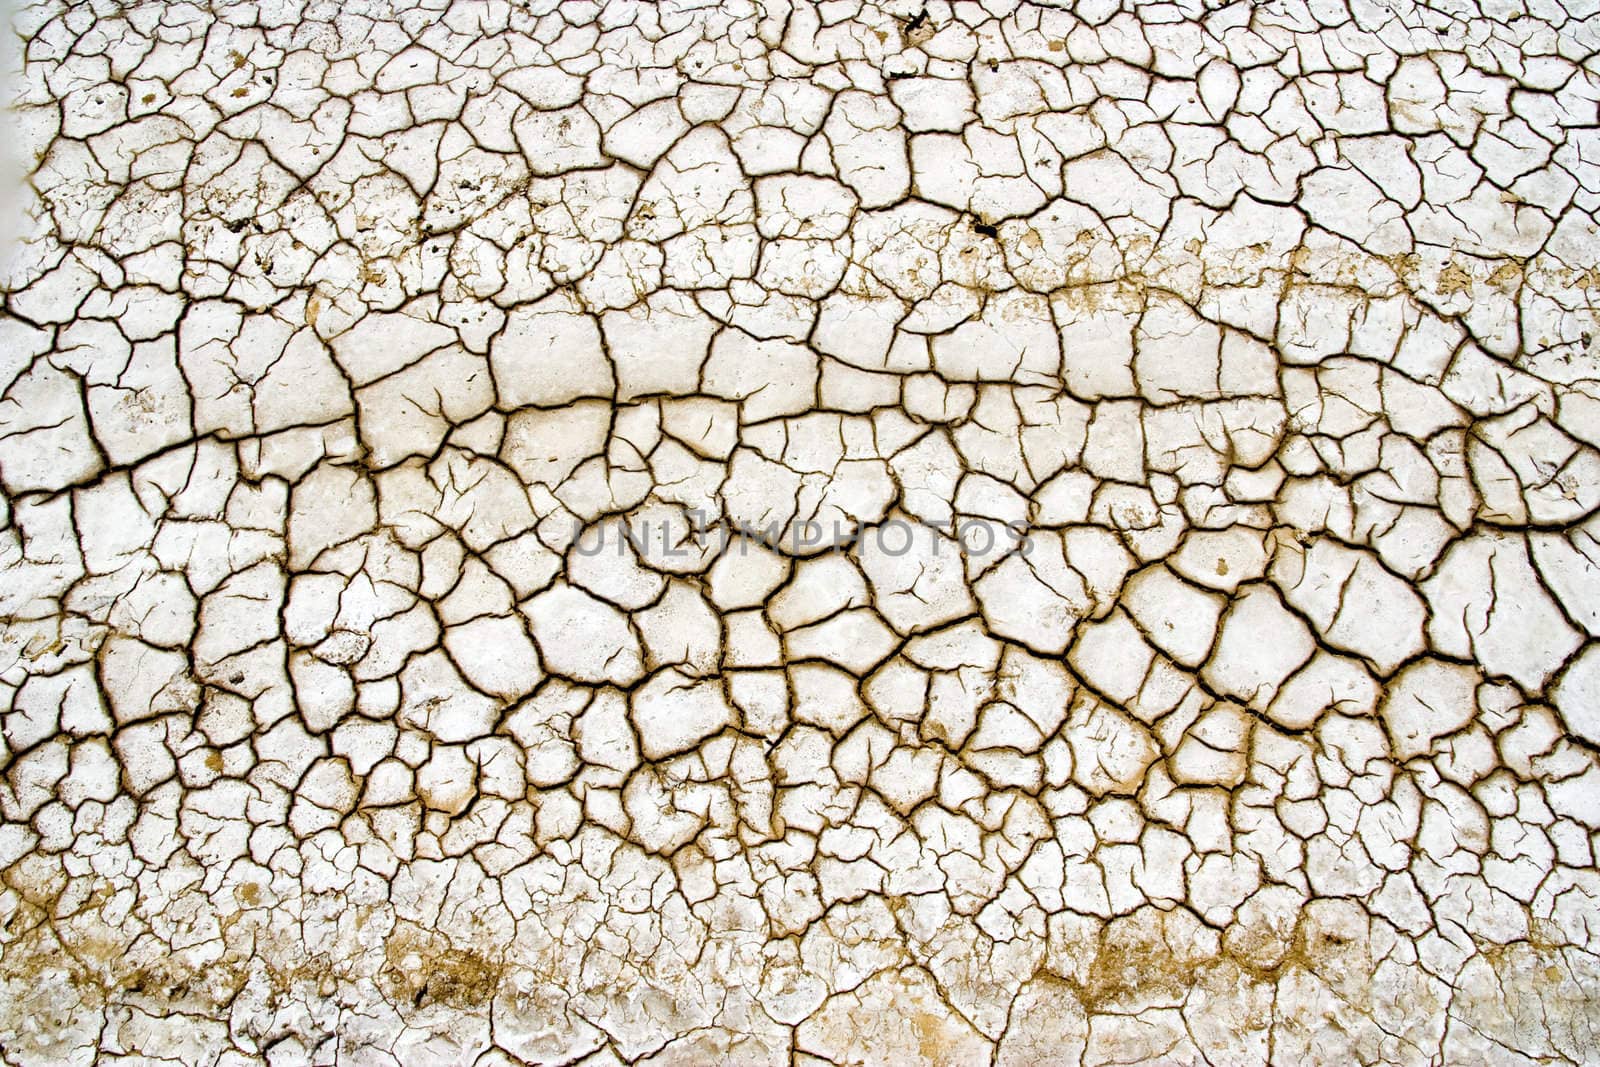 A dry deshydrate cracked terrain